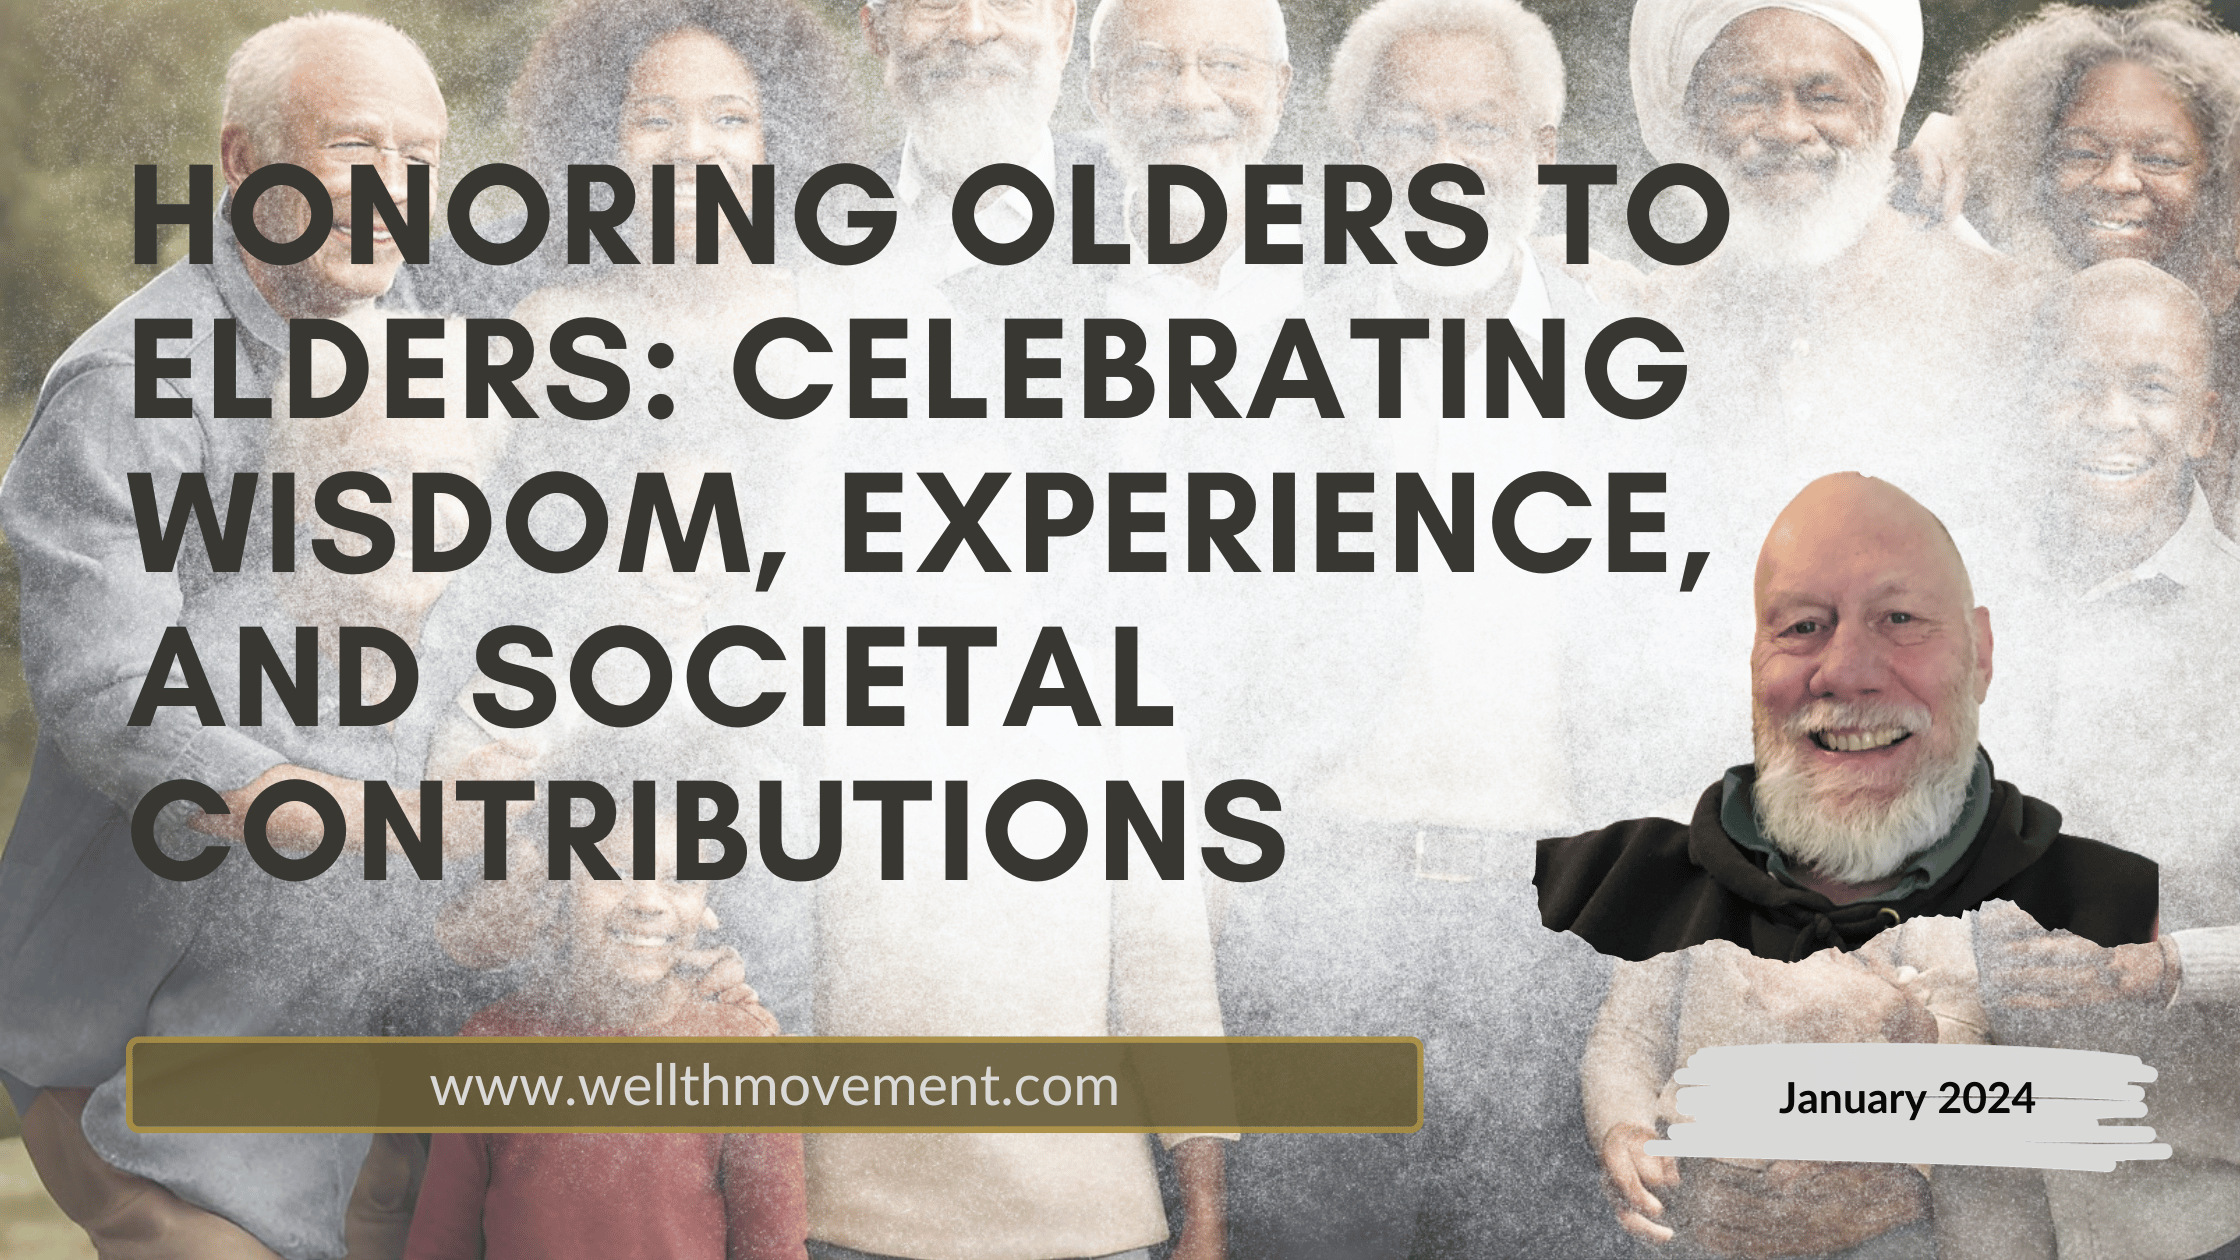 Honoring Celebrating Olders to Elders Contributions